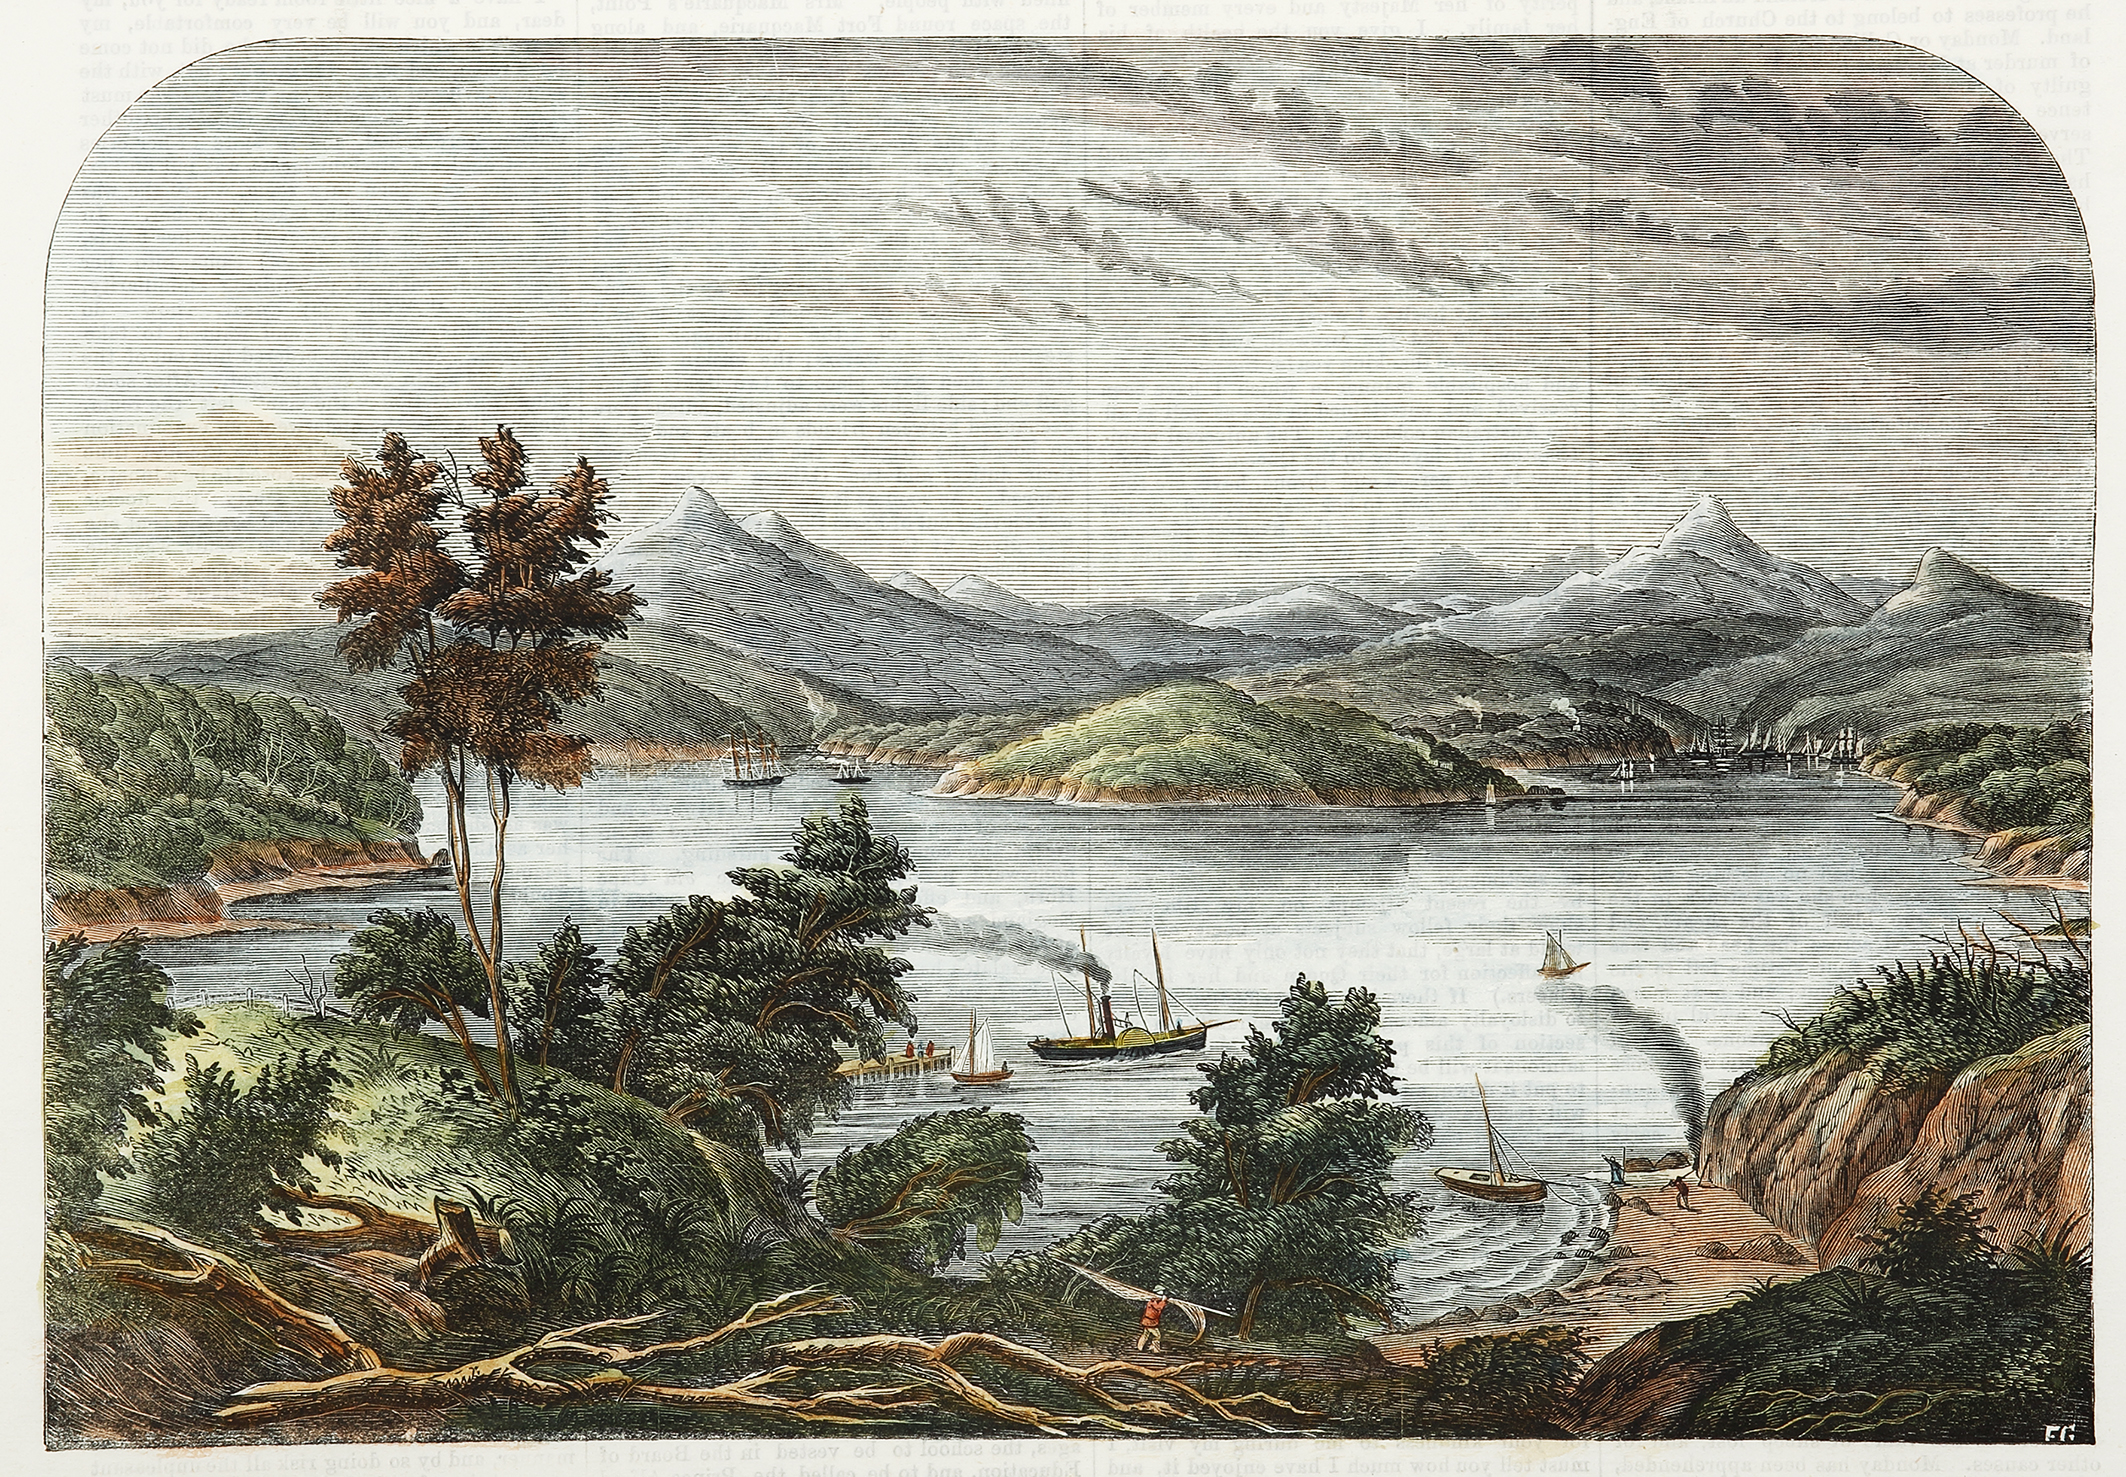 Dunedin Harbor, from Portobello.-Port Chalmers in the Distance, - Antique Print from 1868